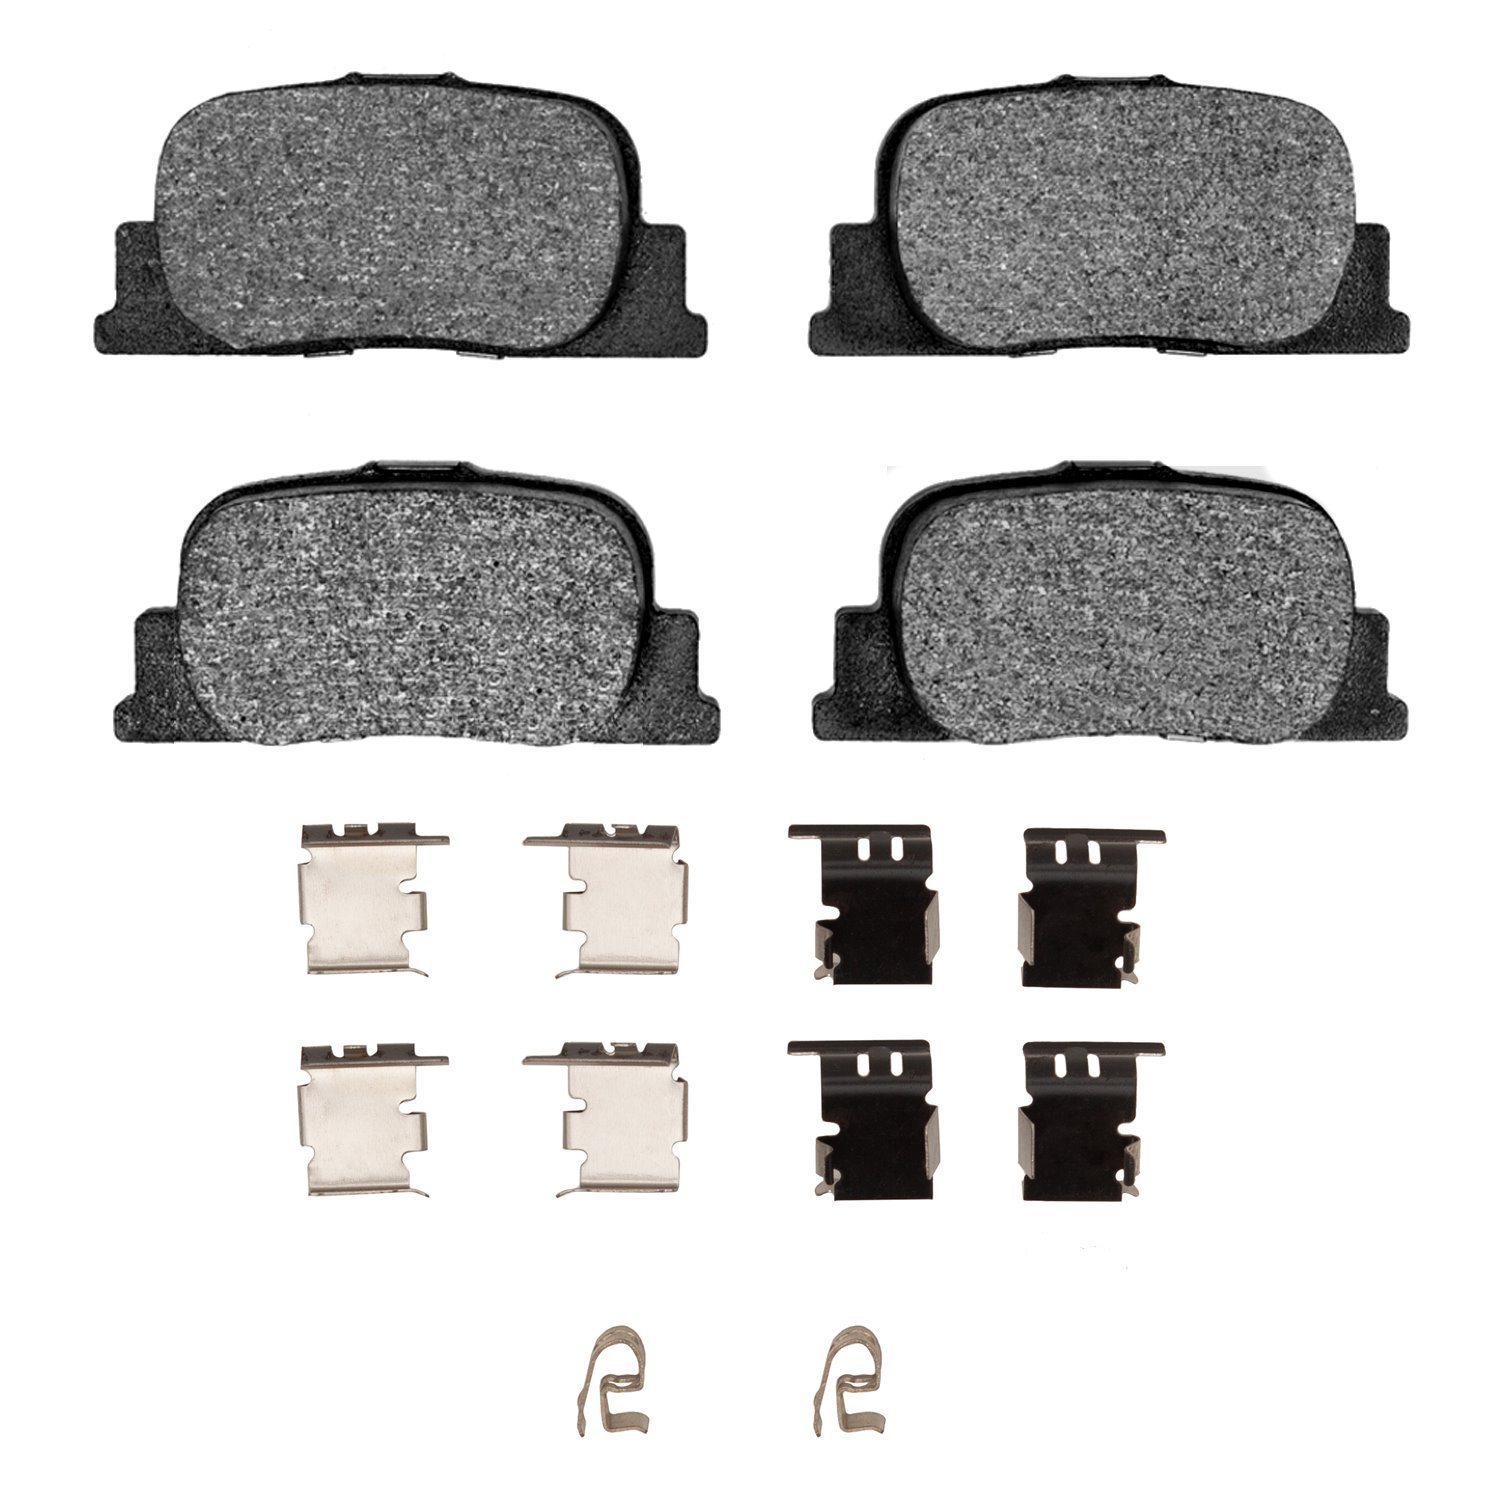 1310-0835-01 3000-Series Ceramic Brake Pads & Hardware Kit, 2000-2010 Multiple Makes/Models, Position: Rear